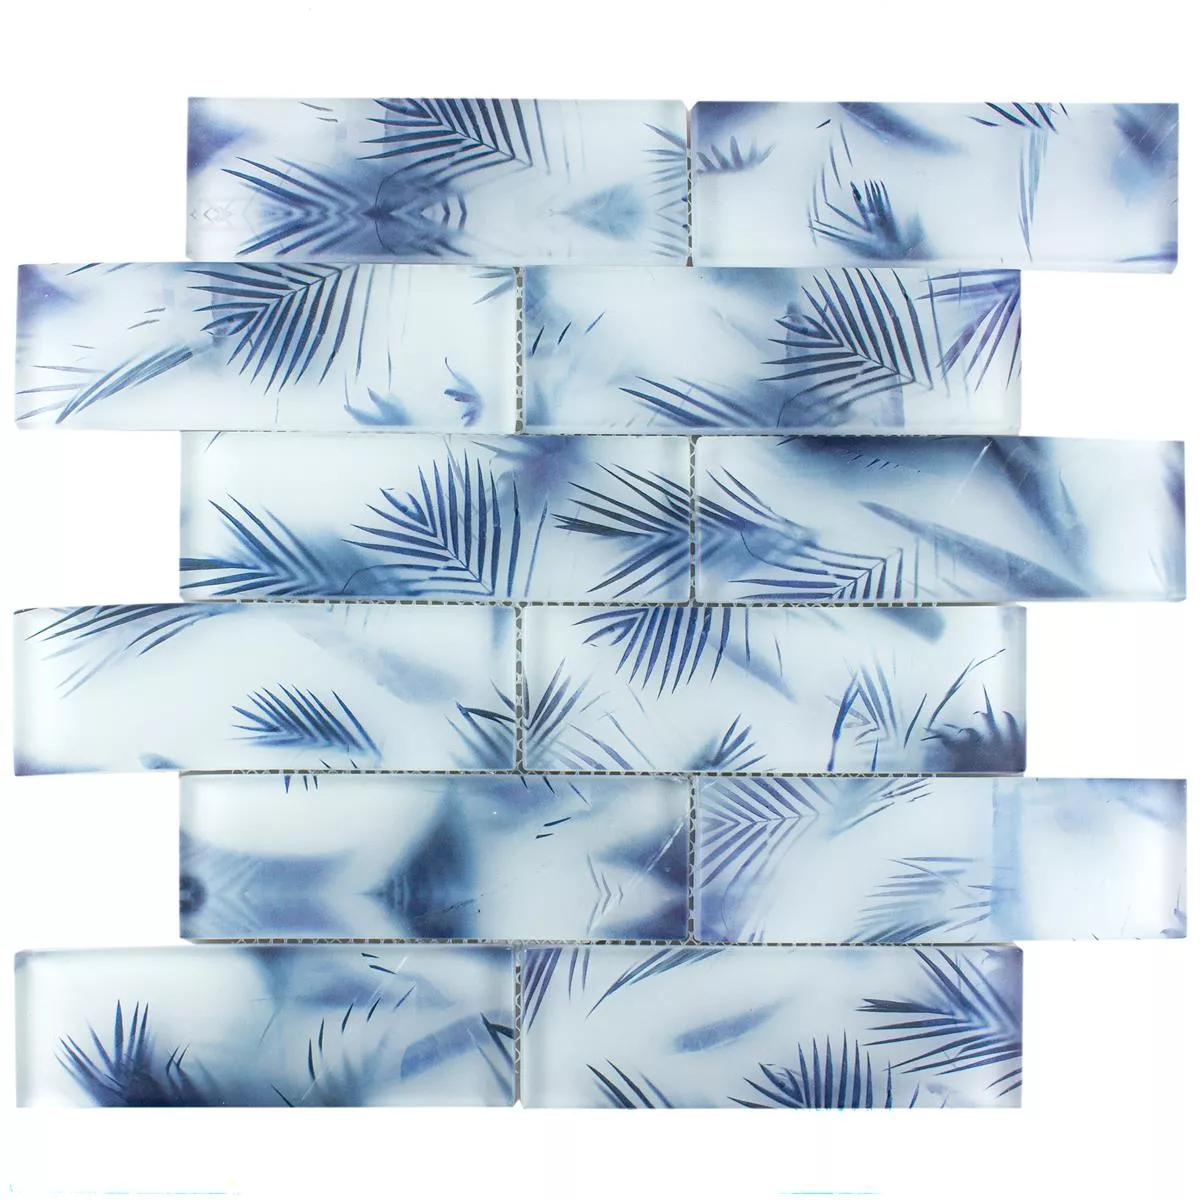 Mozaic De Sticlă Gresie Kronborg Albastru